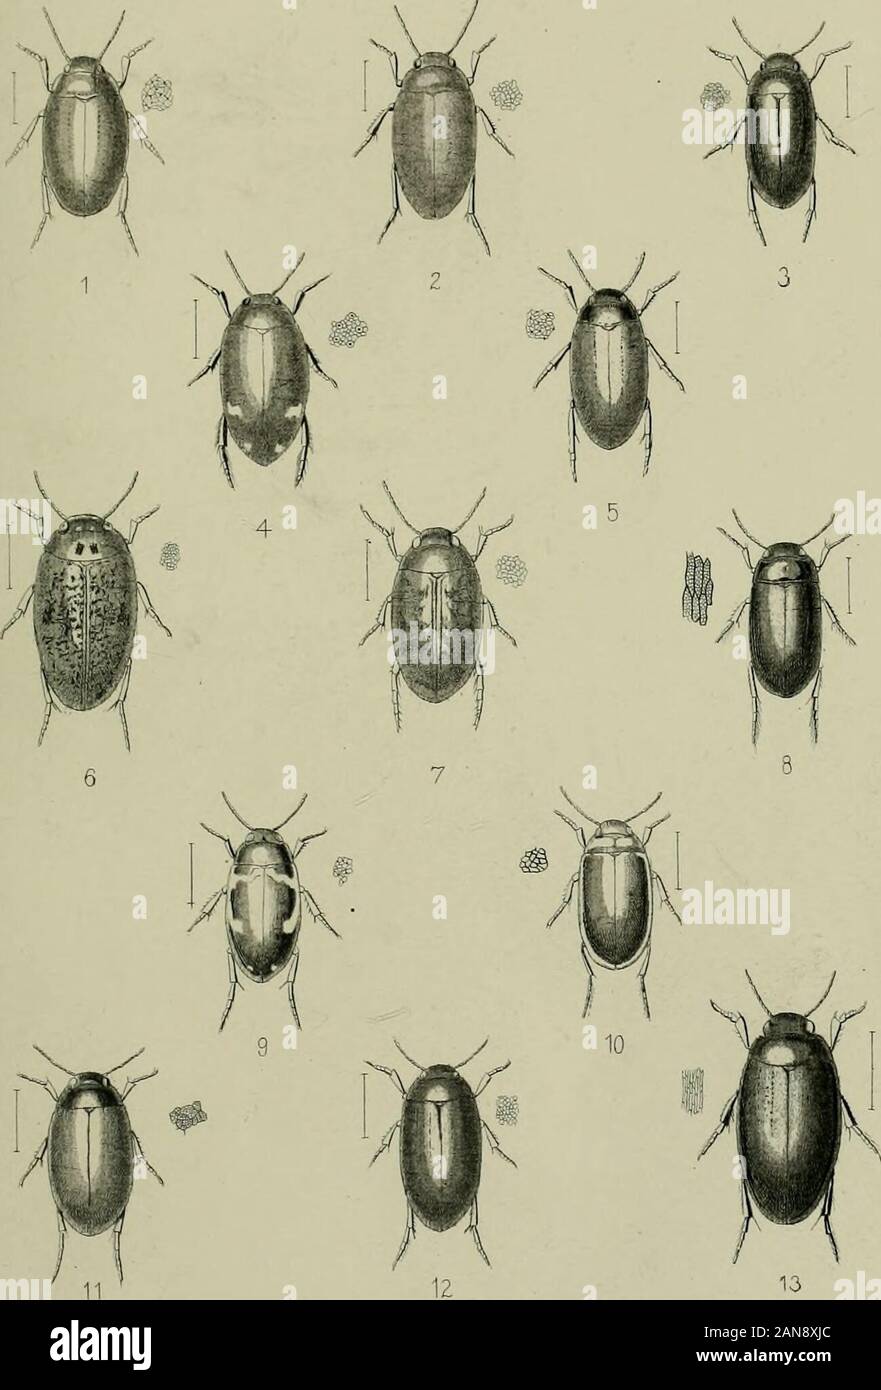 The Coleoptera of the British islandsA descriptive account of the families, genera, and species indigenous to Great Britain and Ireland, with notes as to localities, habitats, etc . 11 12 13 TME CftUaRiDBE SCIOlTIFIC INSTBUMENT COMPaNV L.R^EVE &C0 LONDON. TLATE XXVIII. Fjg. I. Agabiis uliginosus, L., male. ^ , „ female 3. , alfinis, Paylc. -i- , (liJytnu?, 01. 5. , , congener, Patjk. 6. , uebulosus, Forsl. 7. , conspeisus, Margk. 8. , stiiolatus, Gi/ll. P- , abbreviatus, F. 10. , nicticus, PaijJc. 11. , Sturmii, Gyll. 12. , tlialconotus, Panz. 13. , bipustulatiis, L. PLATE 28.. THE CAMBRIDSE S Stock Photo